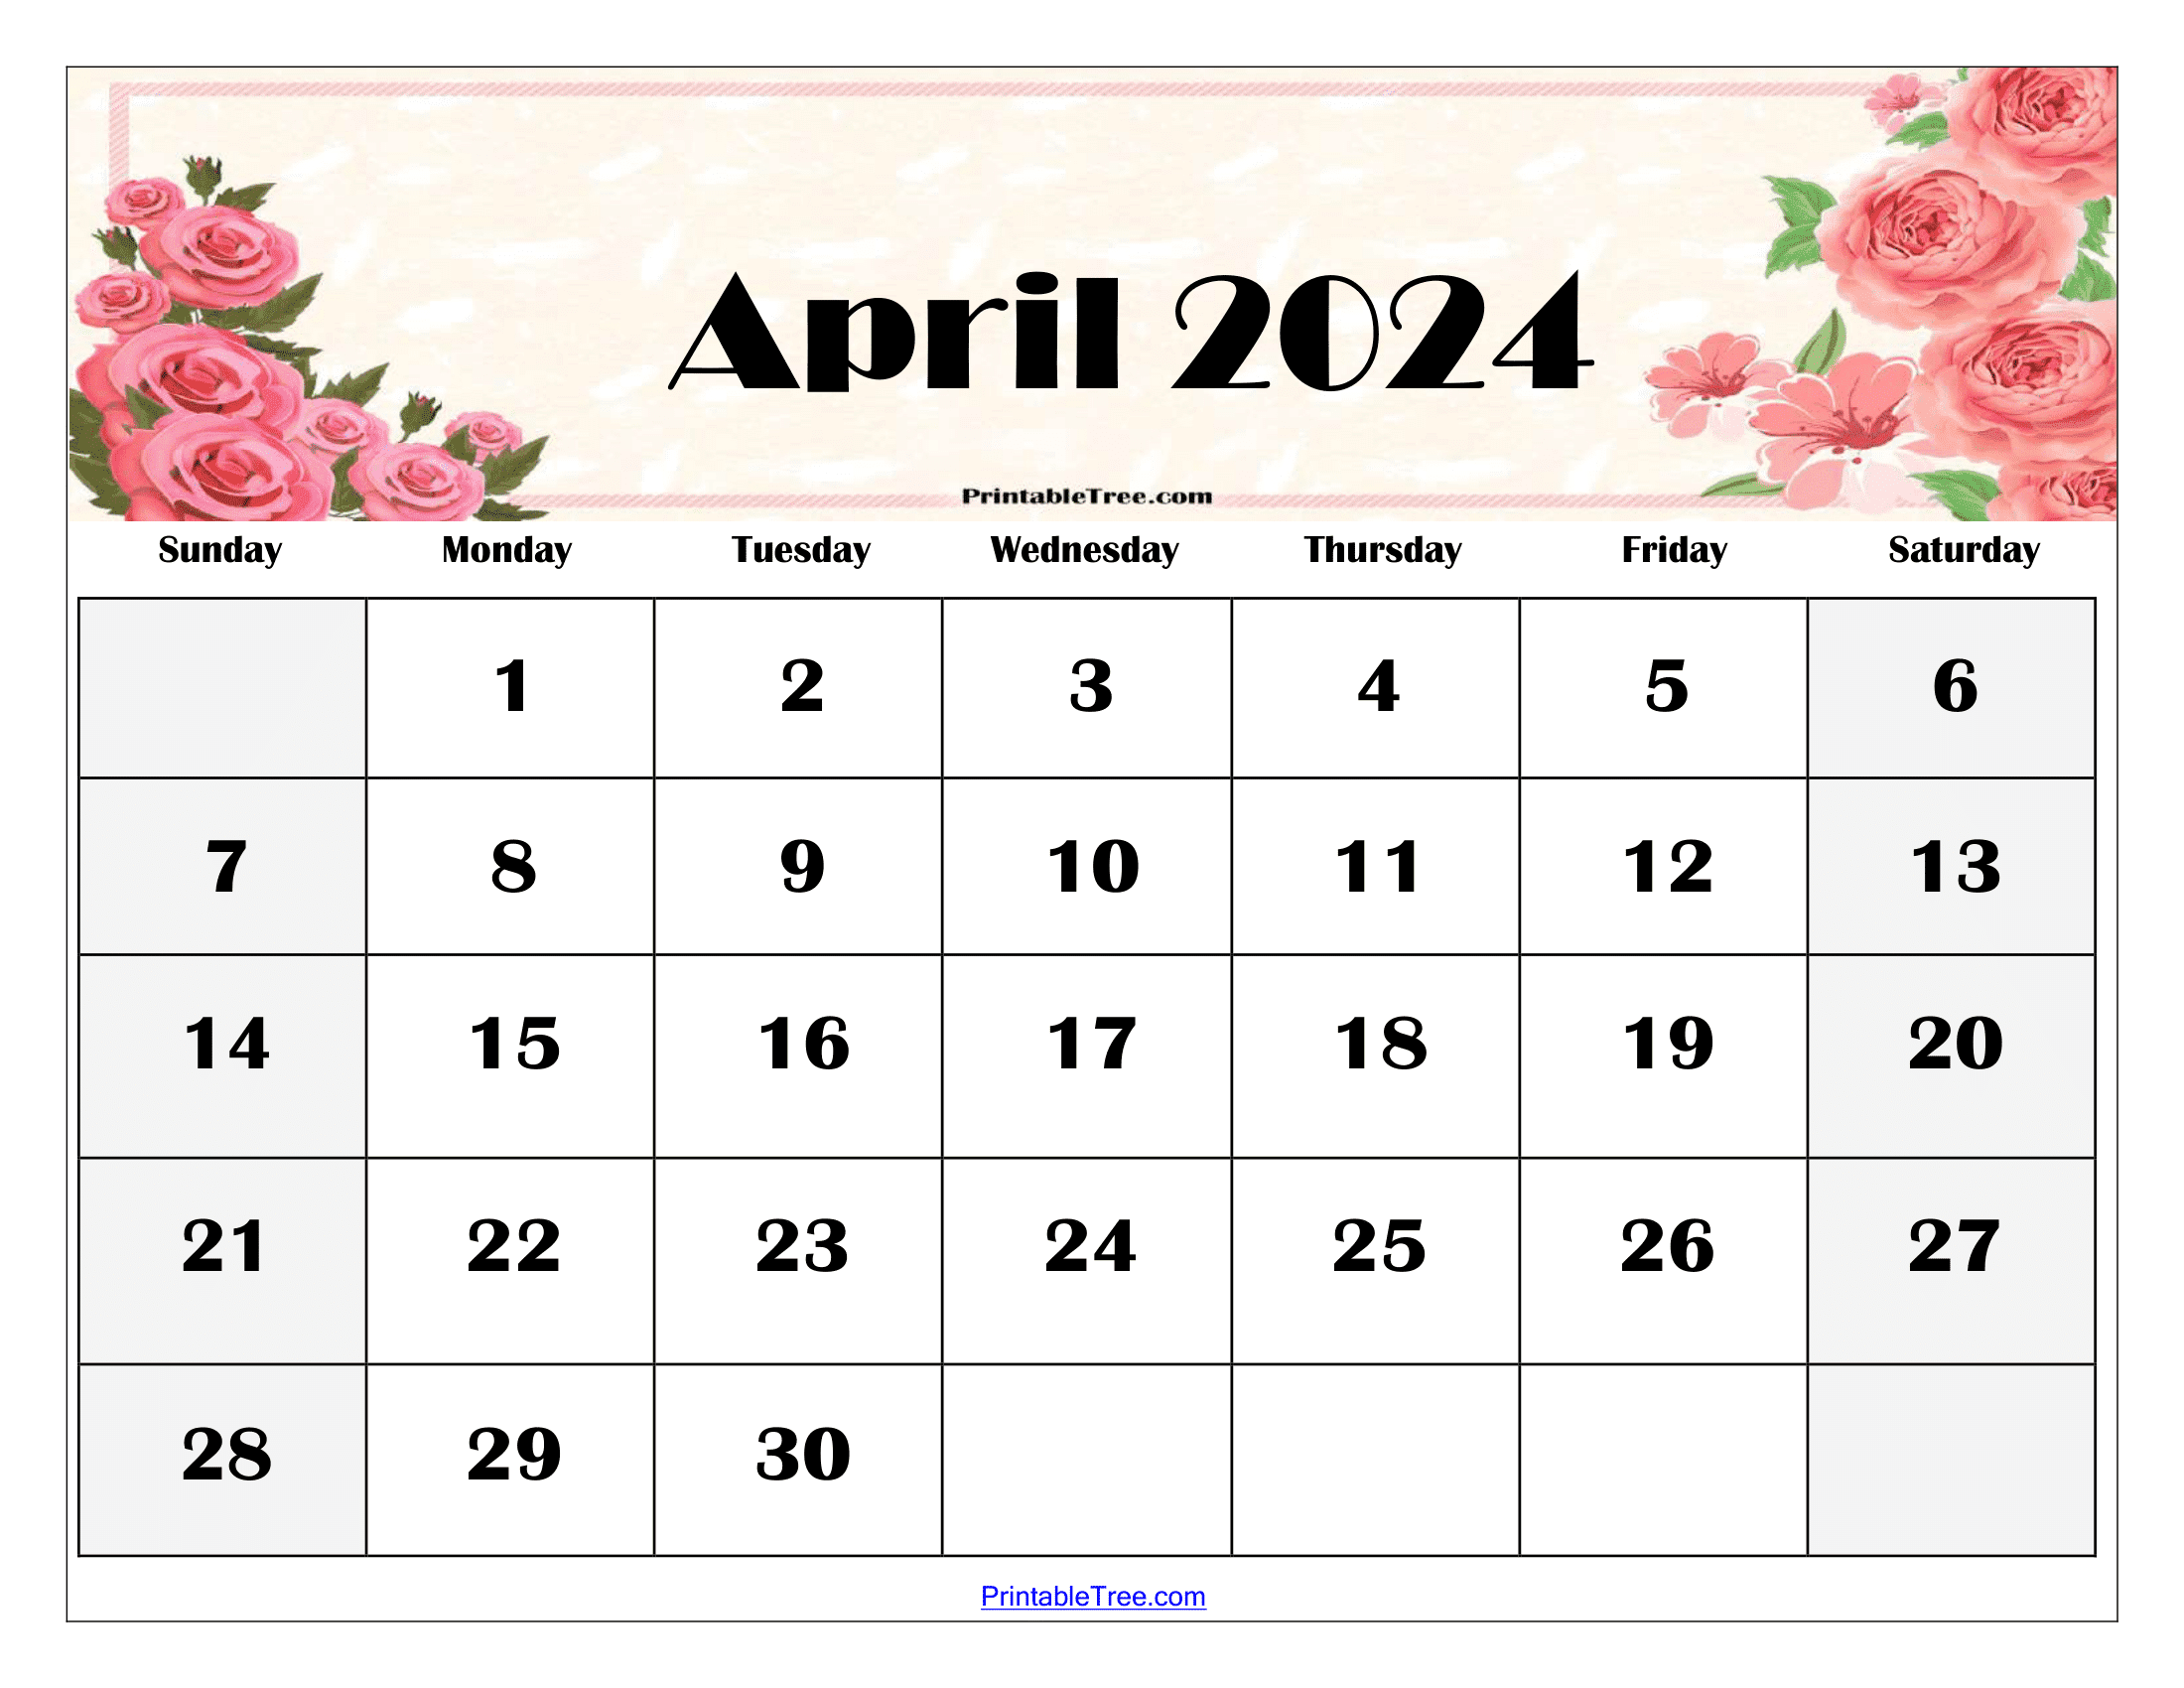 April 2024 Calendar Printable April Blank Calendar 2024 Easy To Use - Free Printable April 2024 Calendar Page